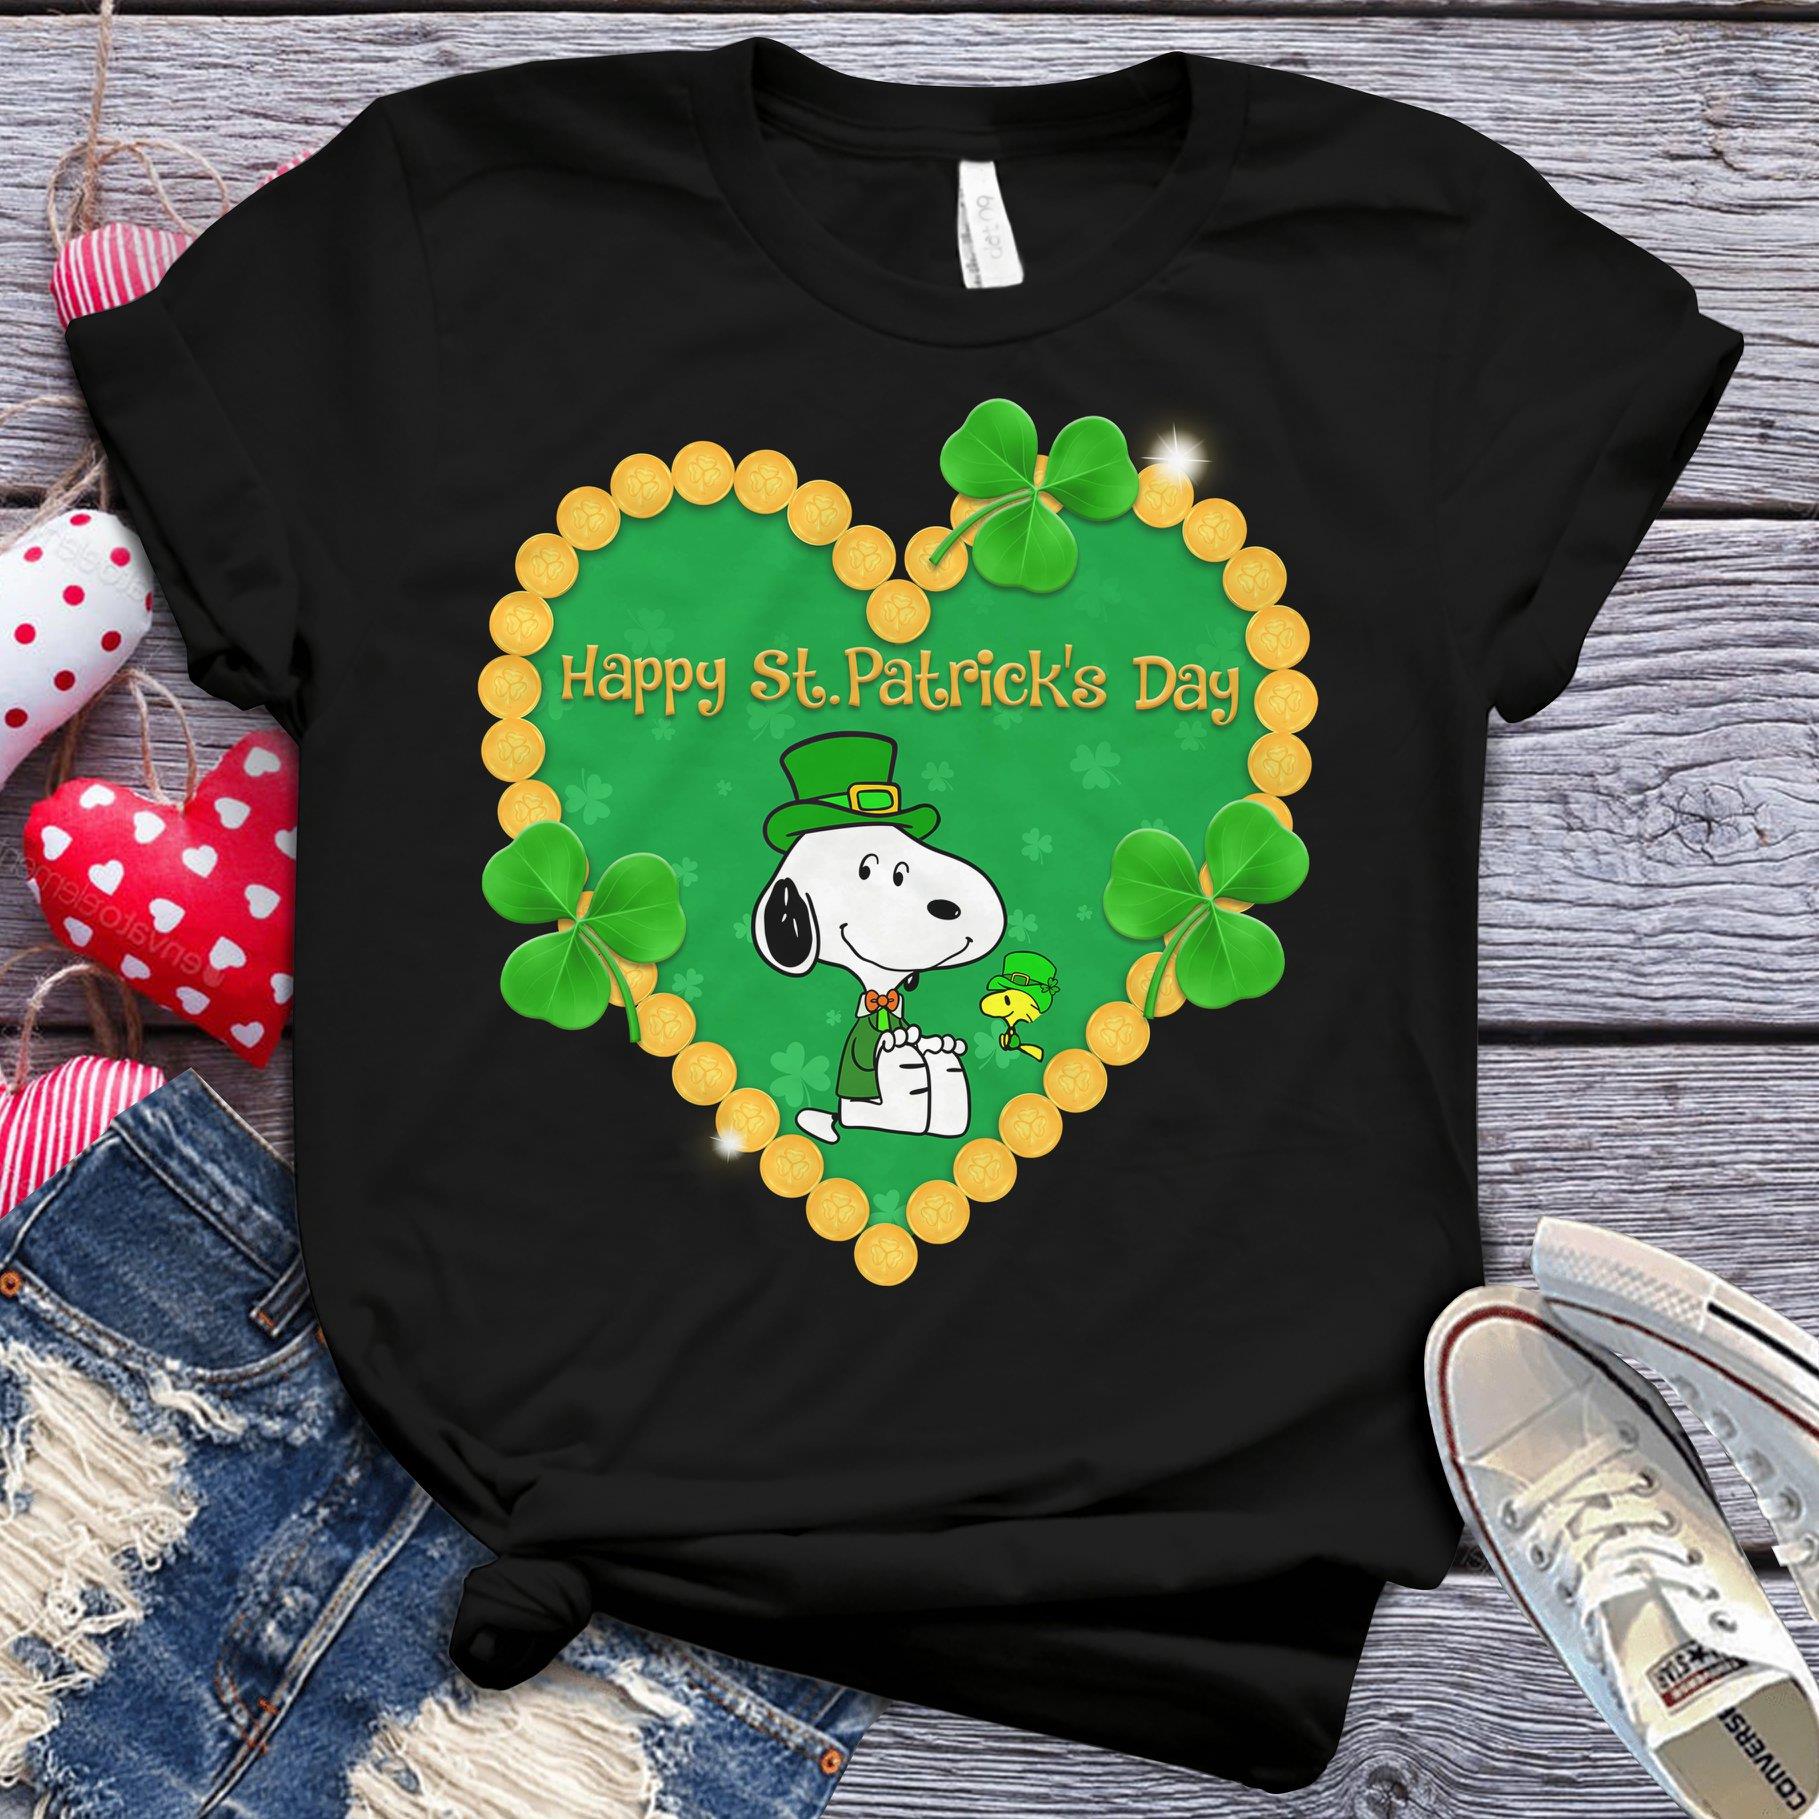 Saint Patrick's Day Very Happy Shirt